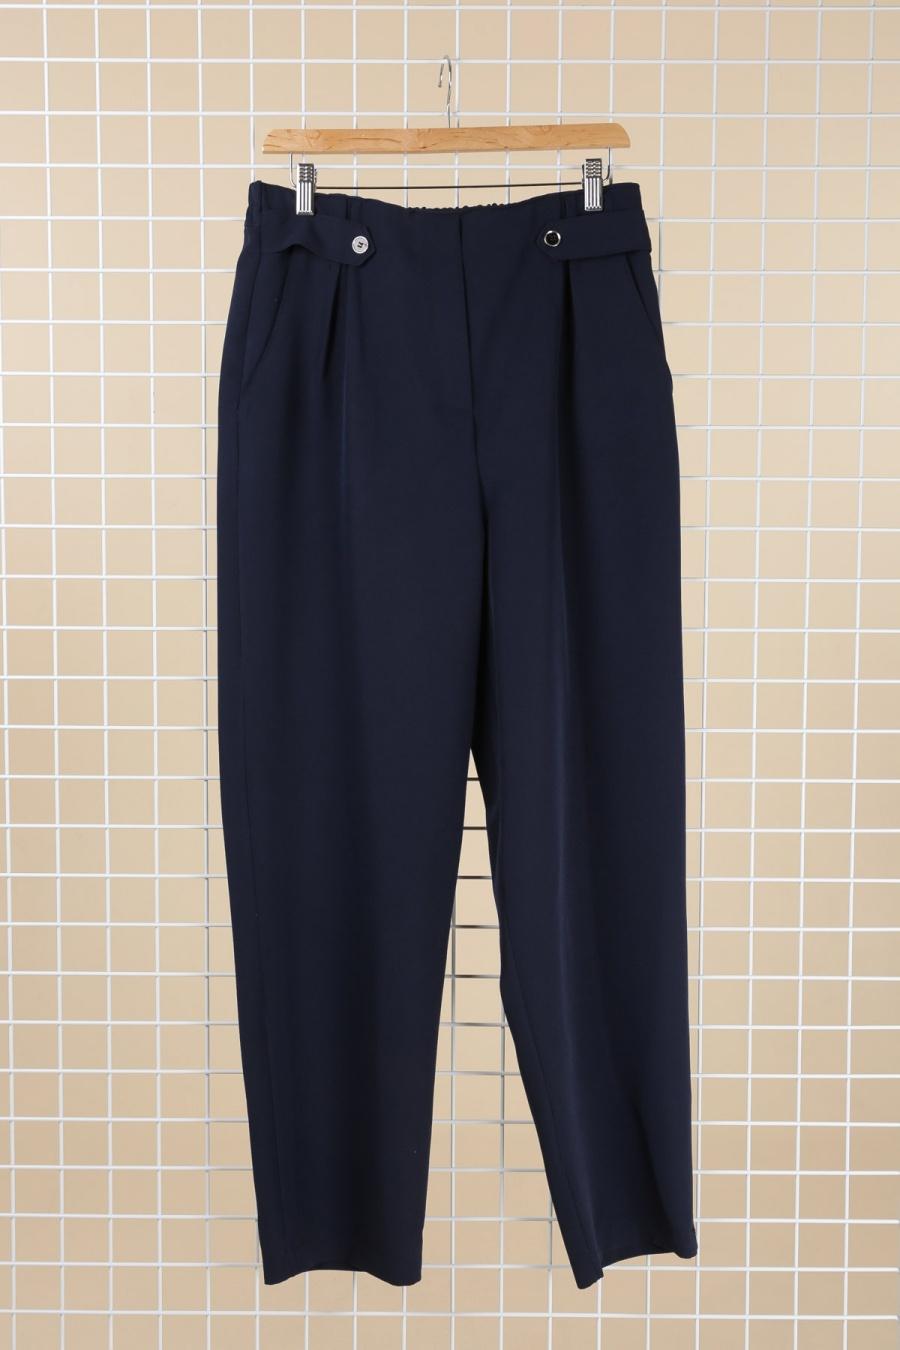 Pantalones Mujer Navy blue VETI STYLE 3666 #c Efashion Paris